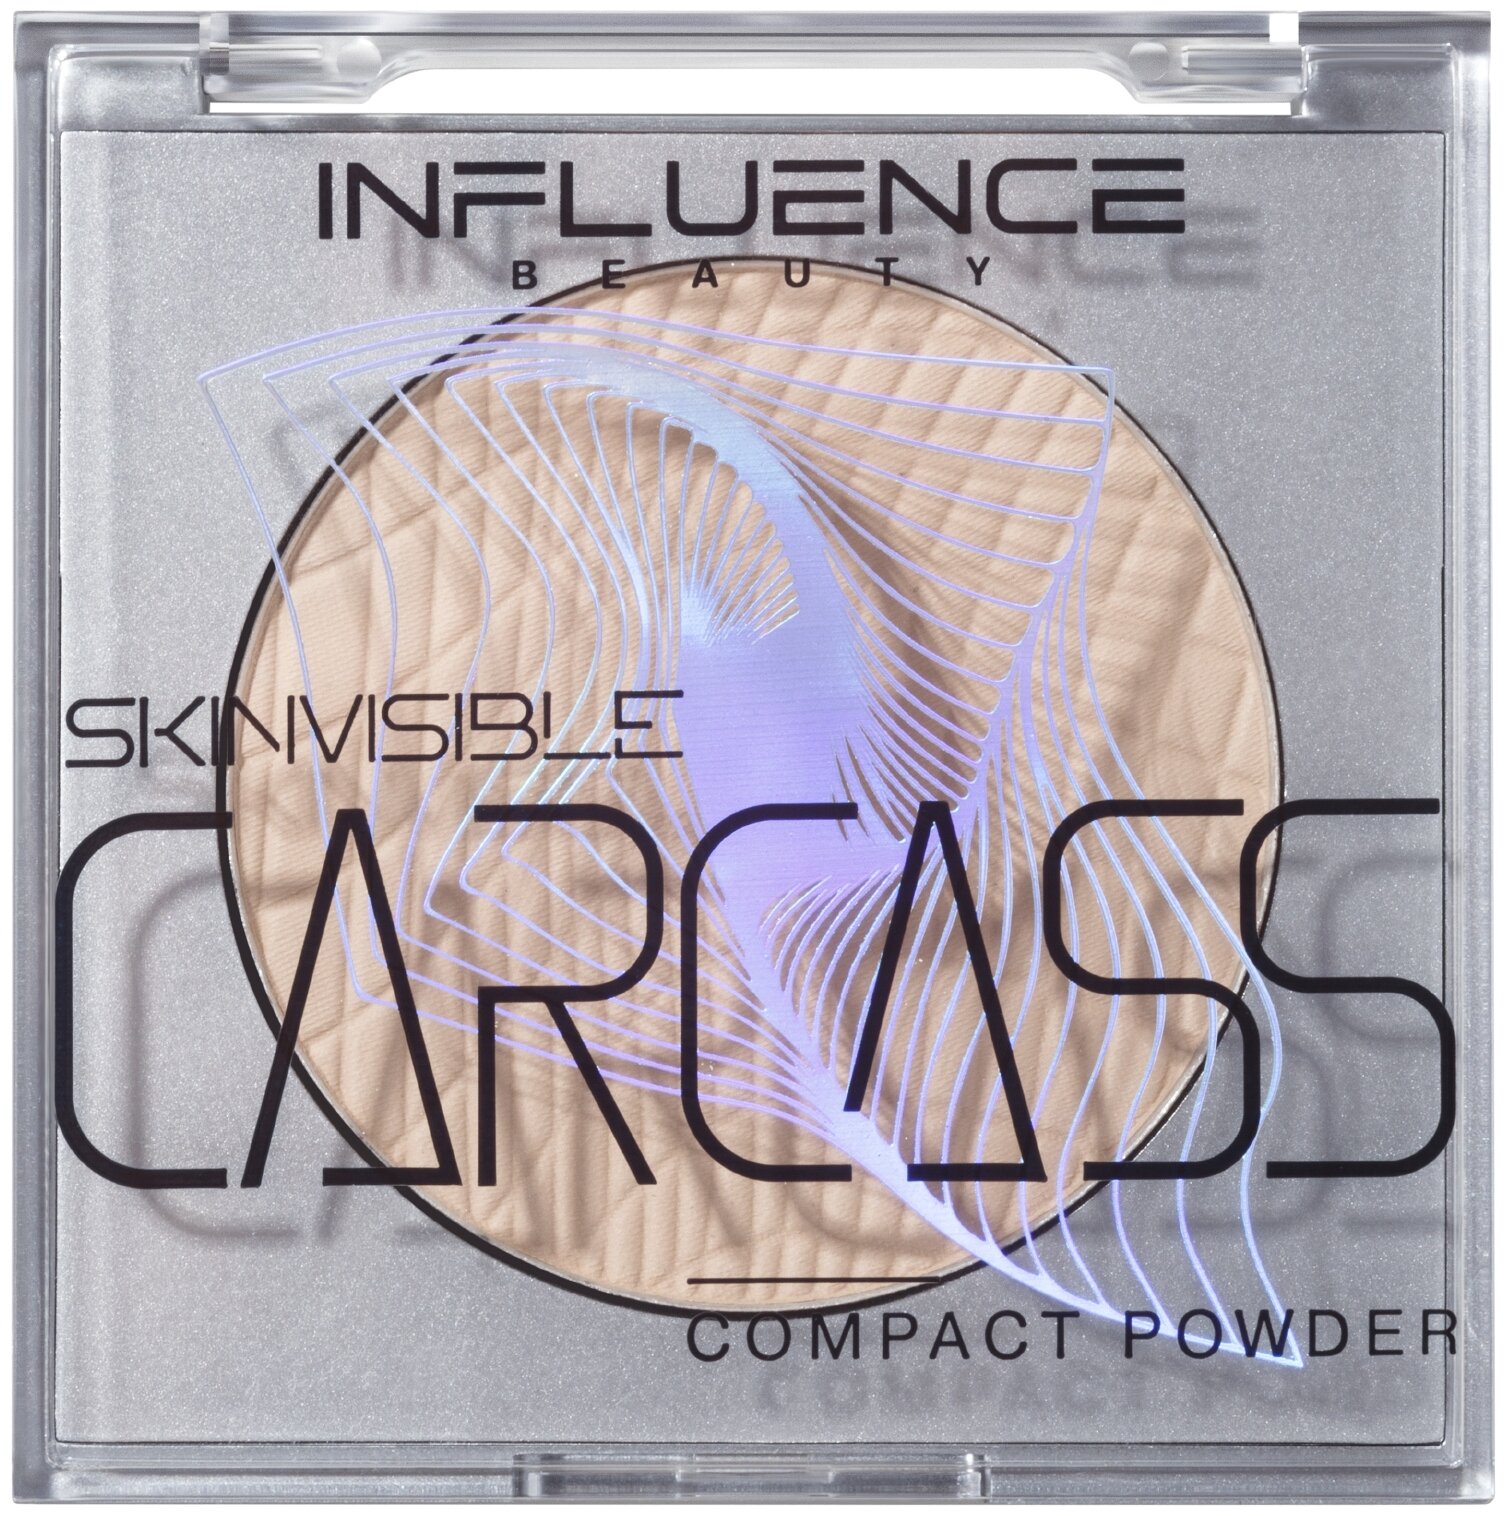 Influence Beauty Пудра Skinvisible carcass компактная легкая естественный матовый финиш 42г